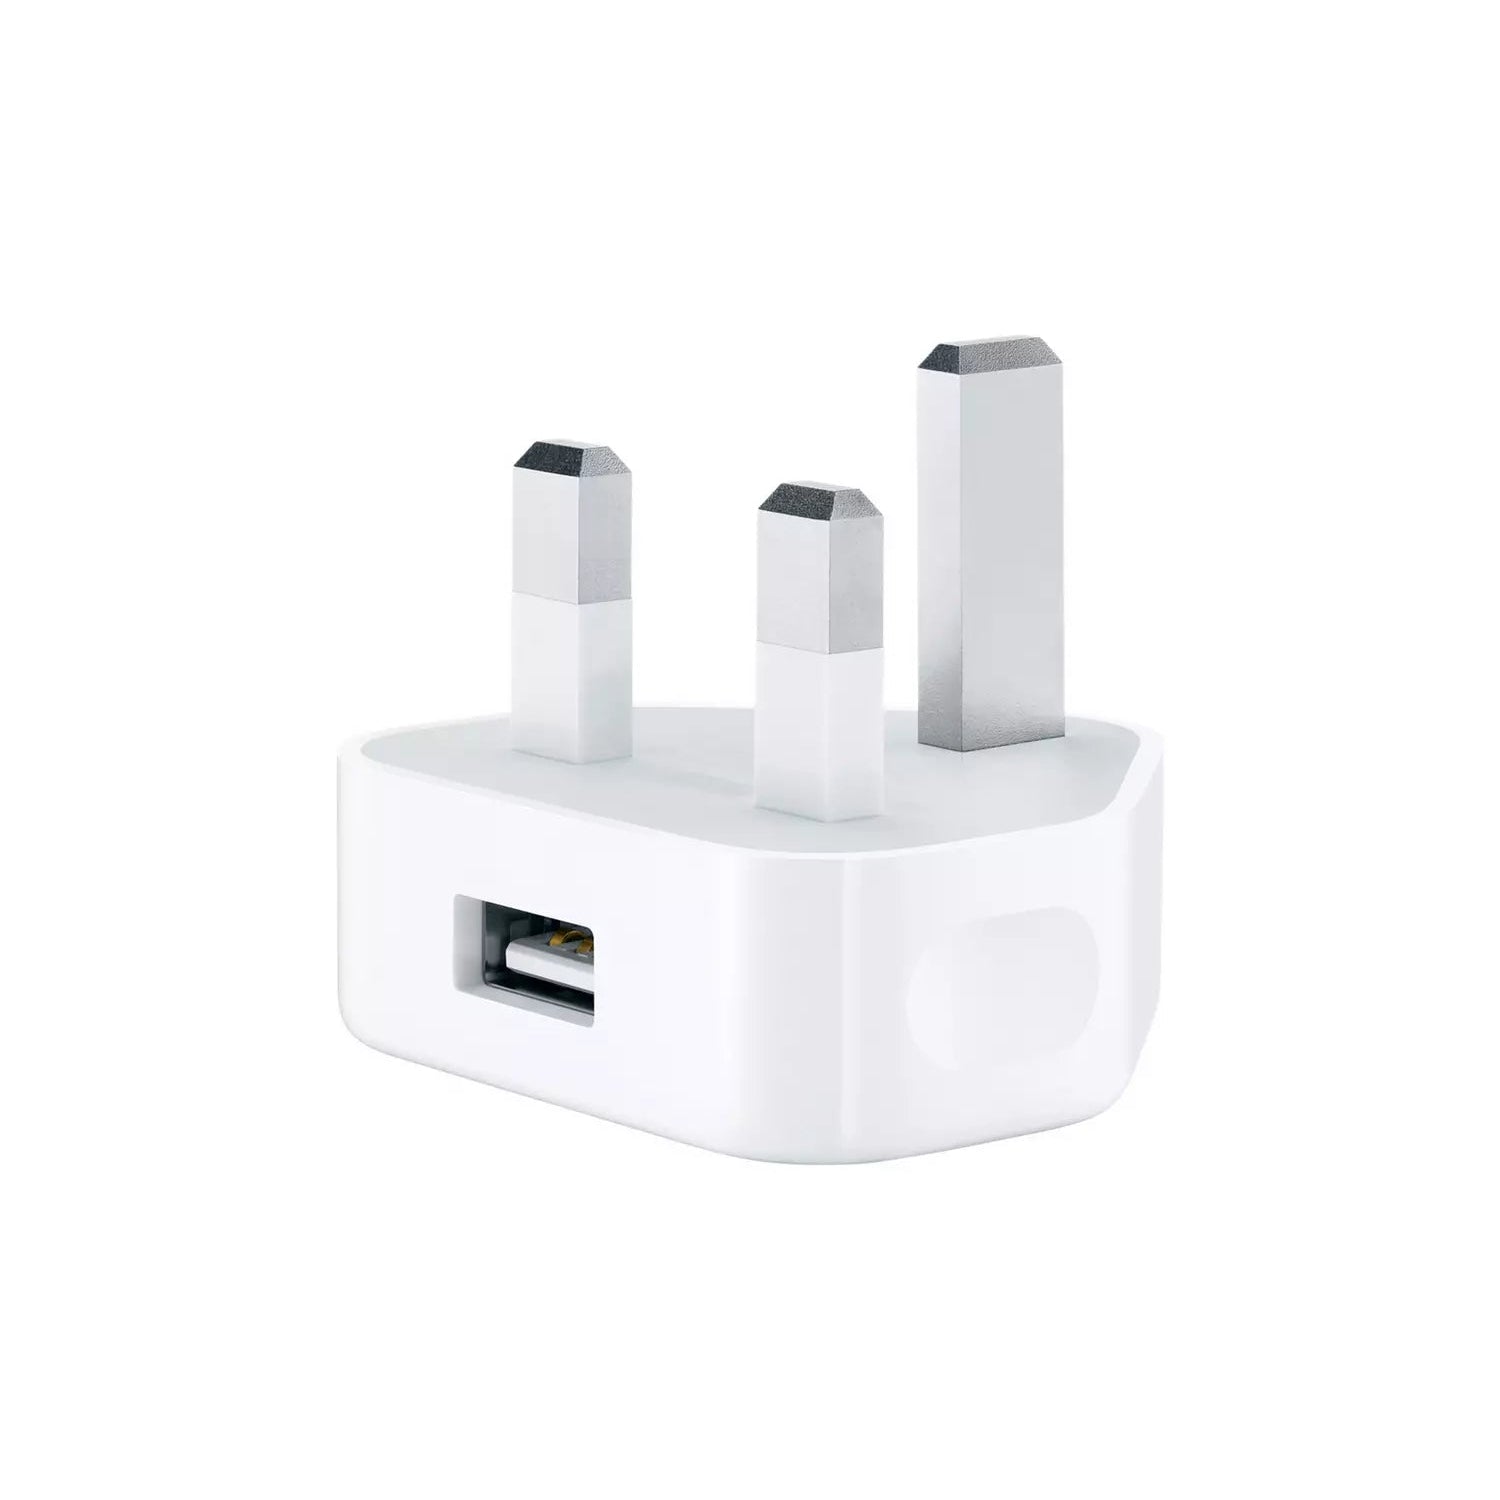 Apple 5W USB Power Adapter - MGN43B/A - Refurbished Good